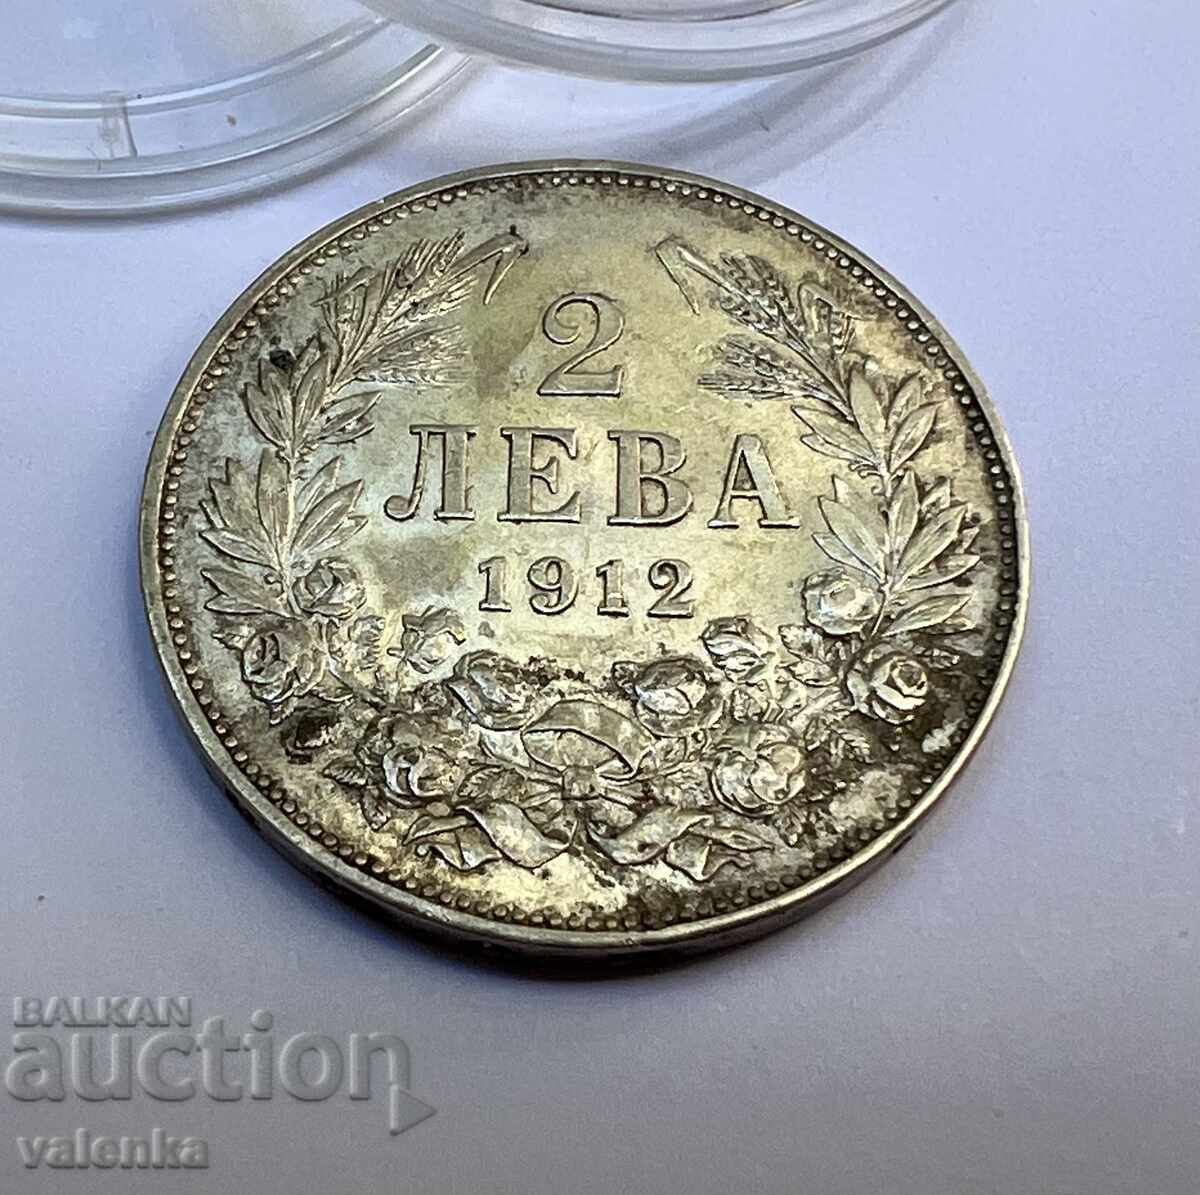 EXCELLENT silver coin 2 BGN 1912 Ferdinand I